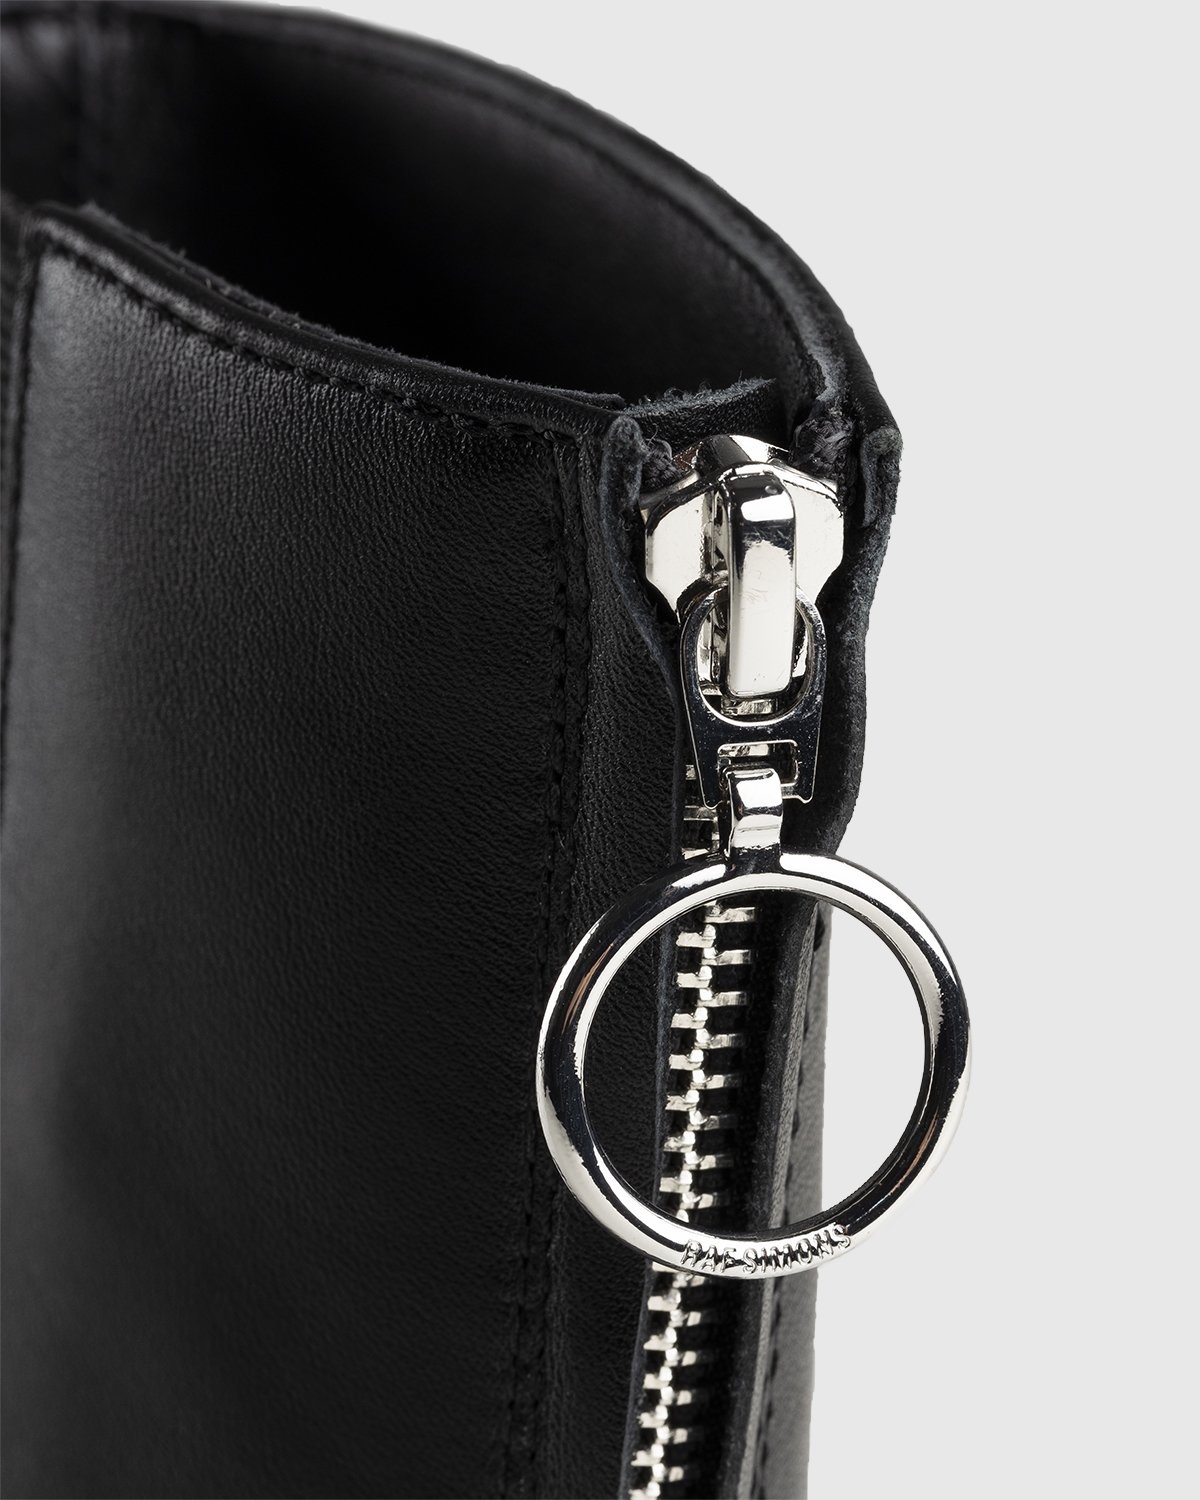 Jil Sander – Chelsea Boots Black - Chelsea Boots - Black - Image 6